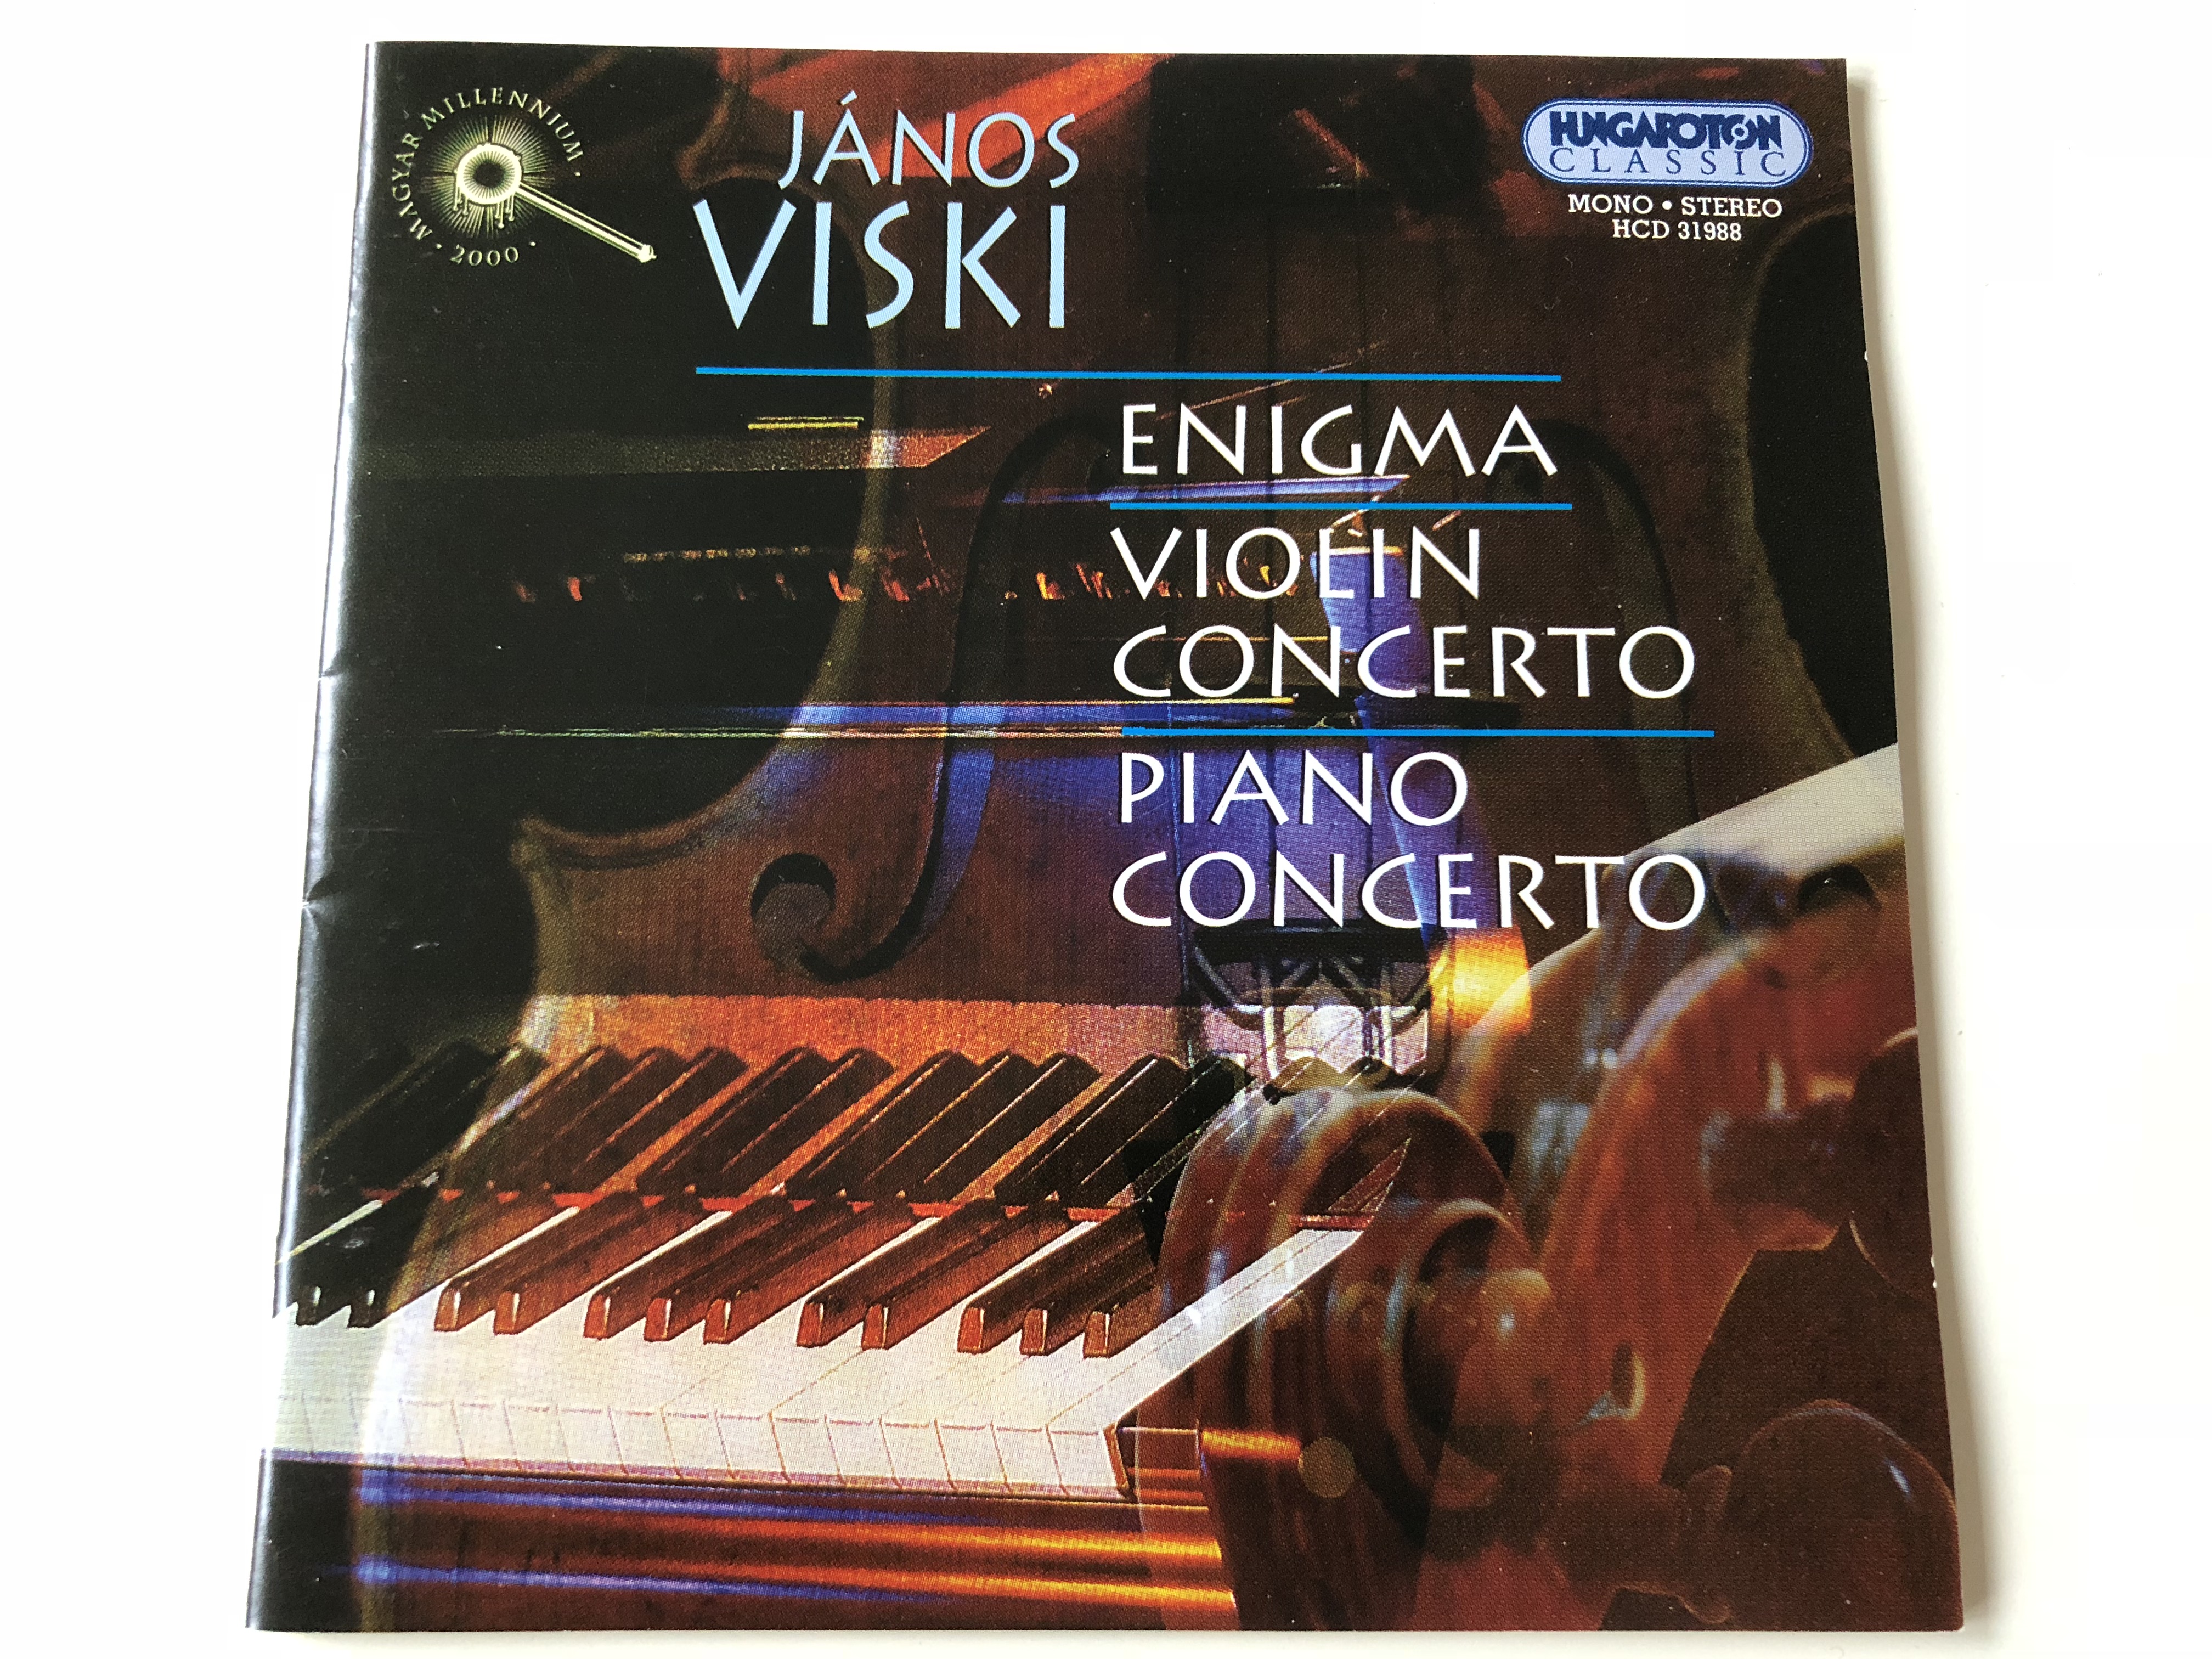 j-nos-viski-enigma-violin-concerto-piano-concerto-hungaroton-classic-audio-cd-2001-hcd-31998-1-.jpg